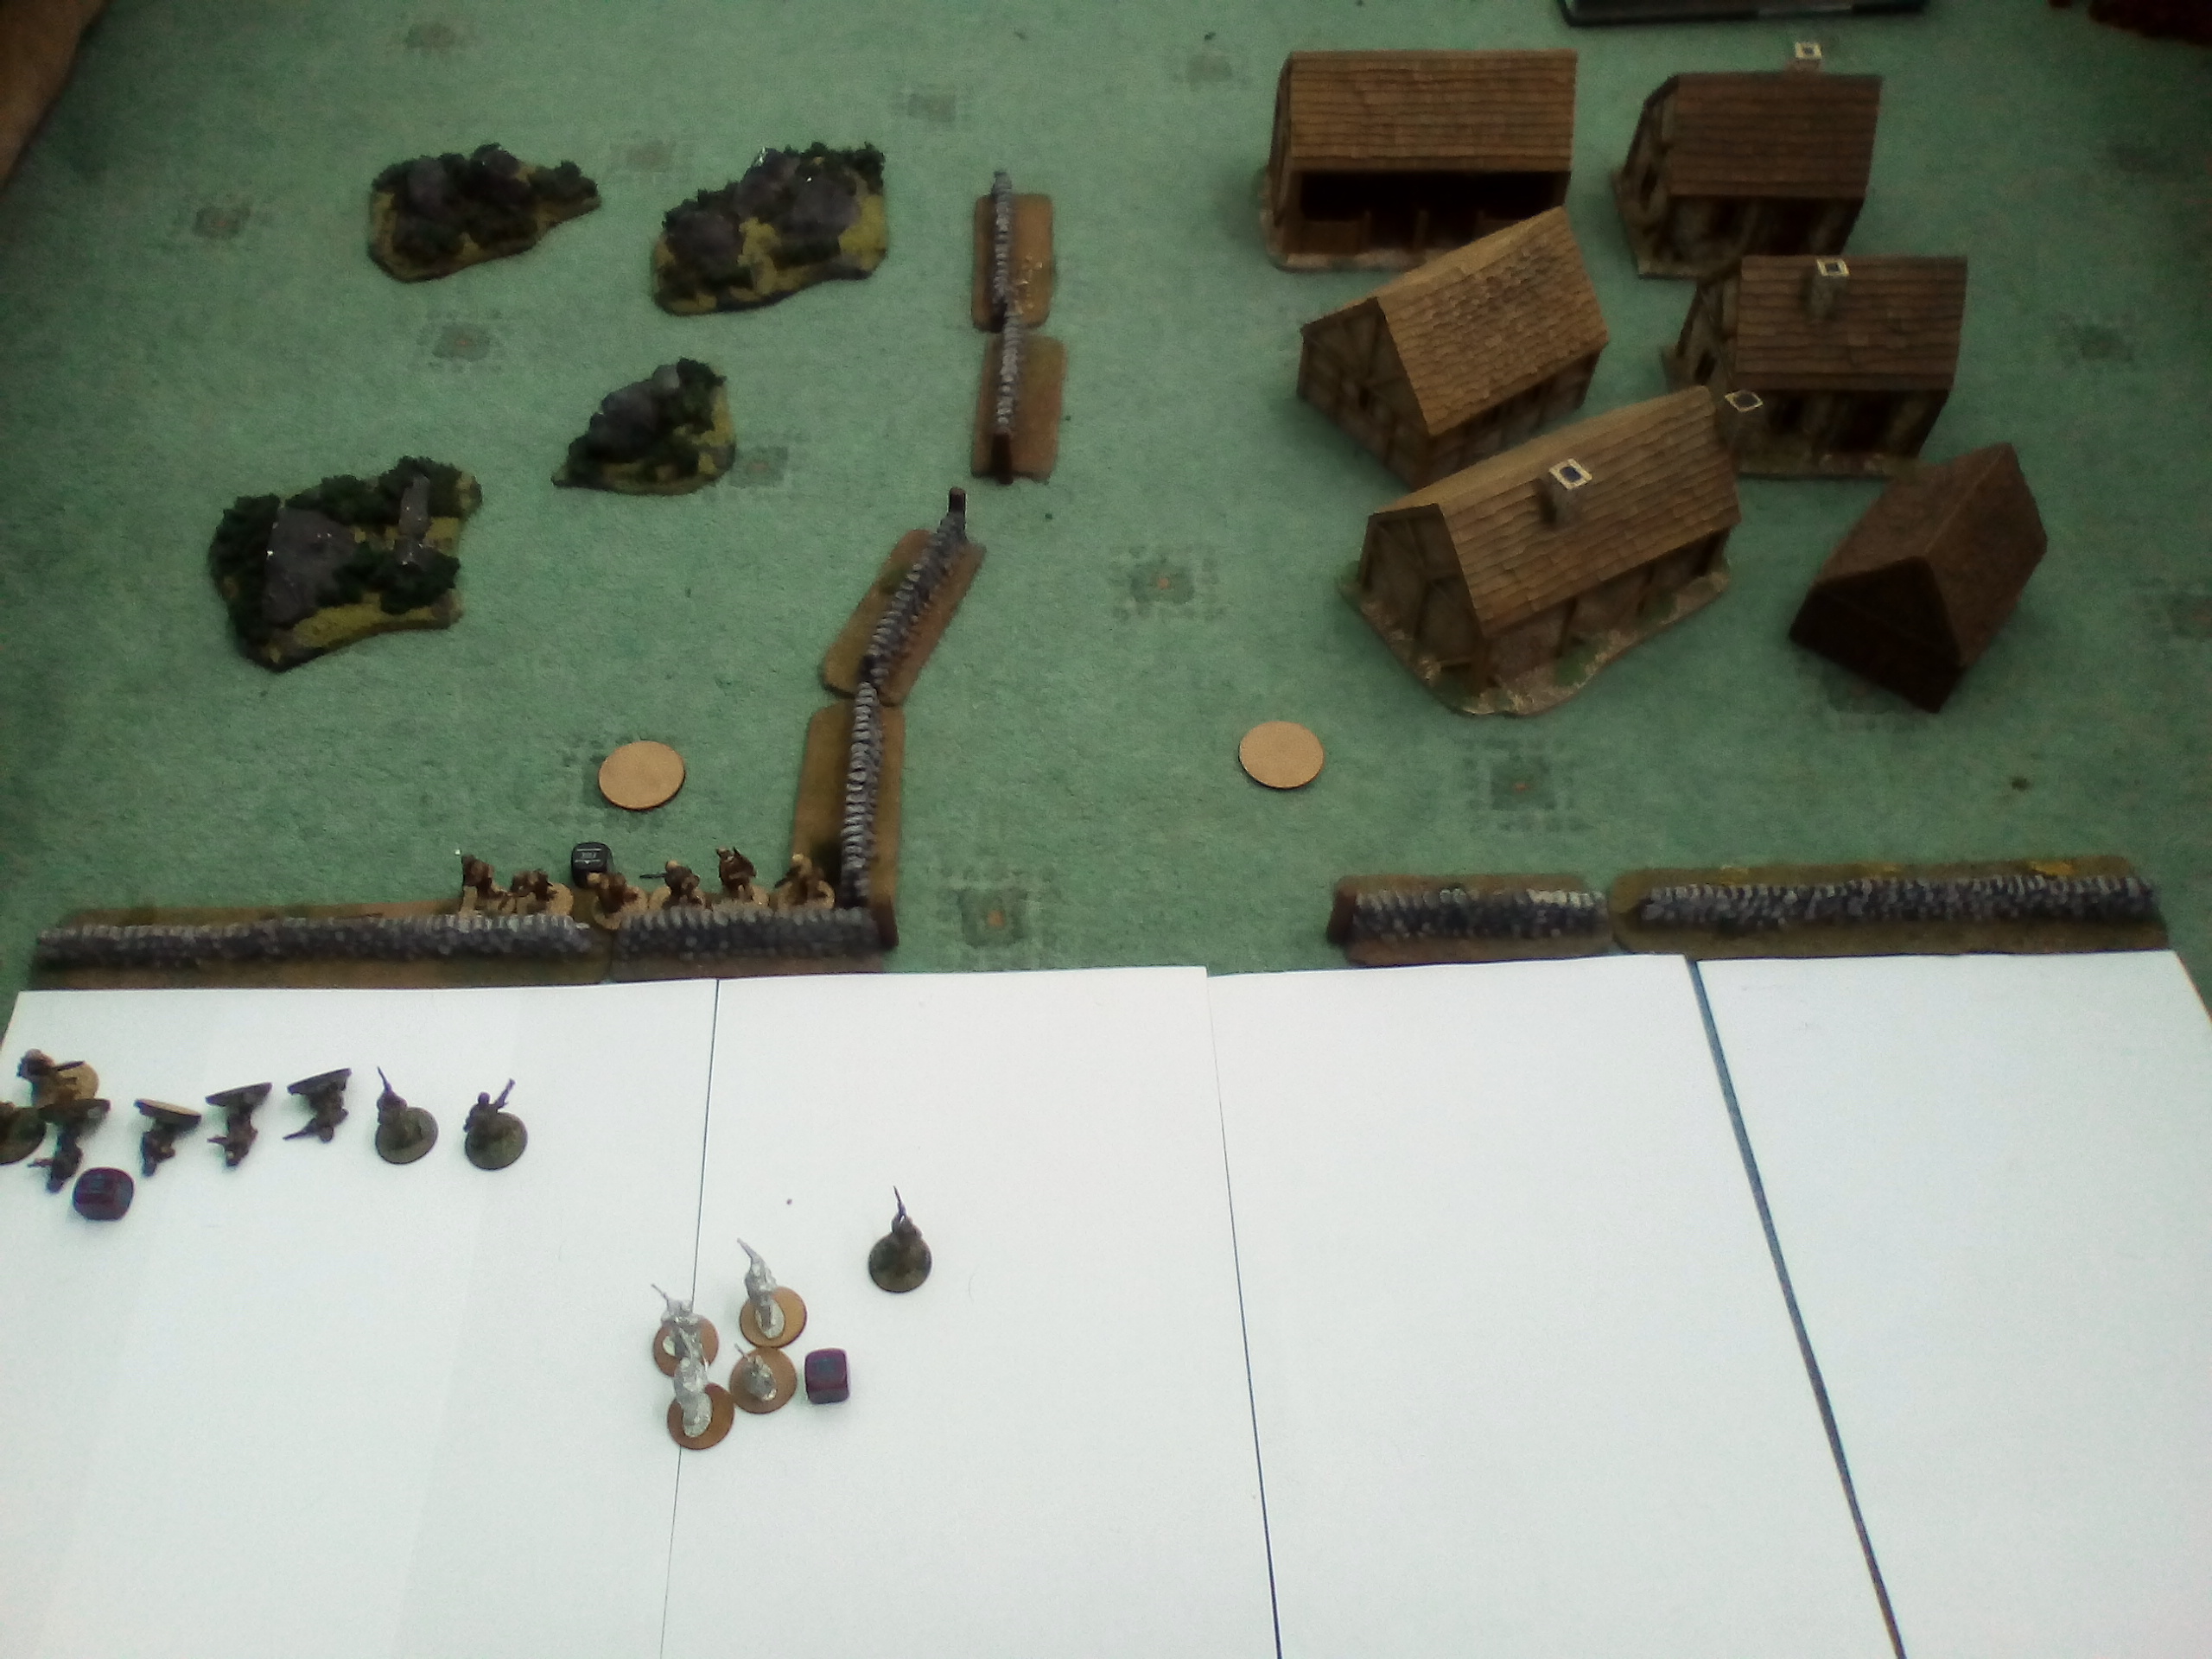 Force Grubber versus 52nd Highland Div in a fierce infantry engagement